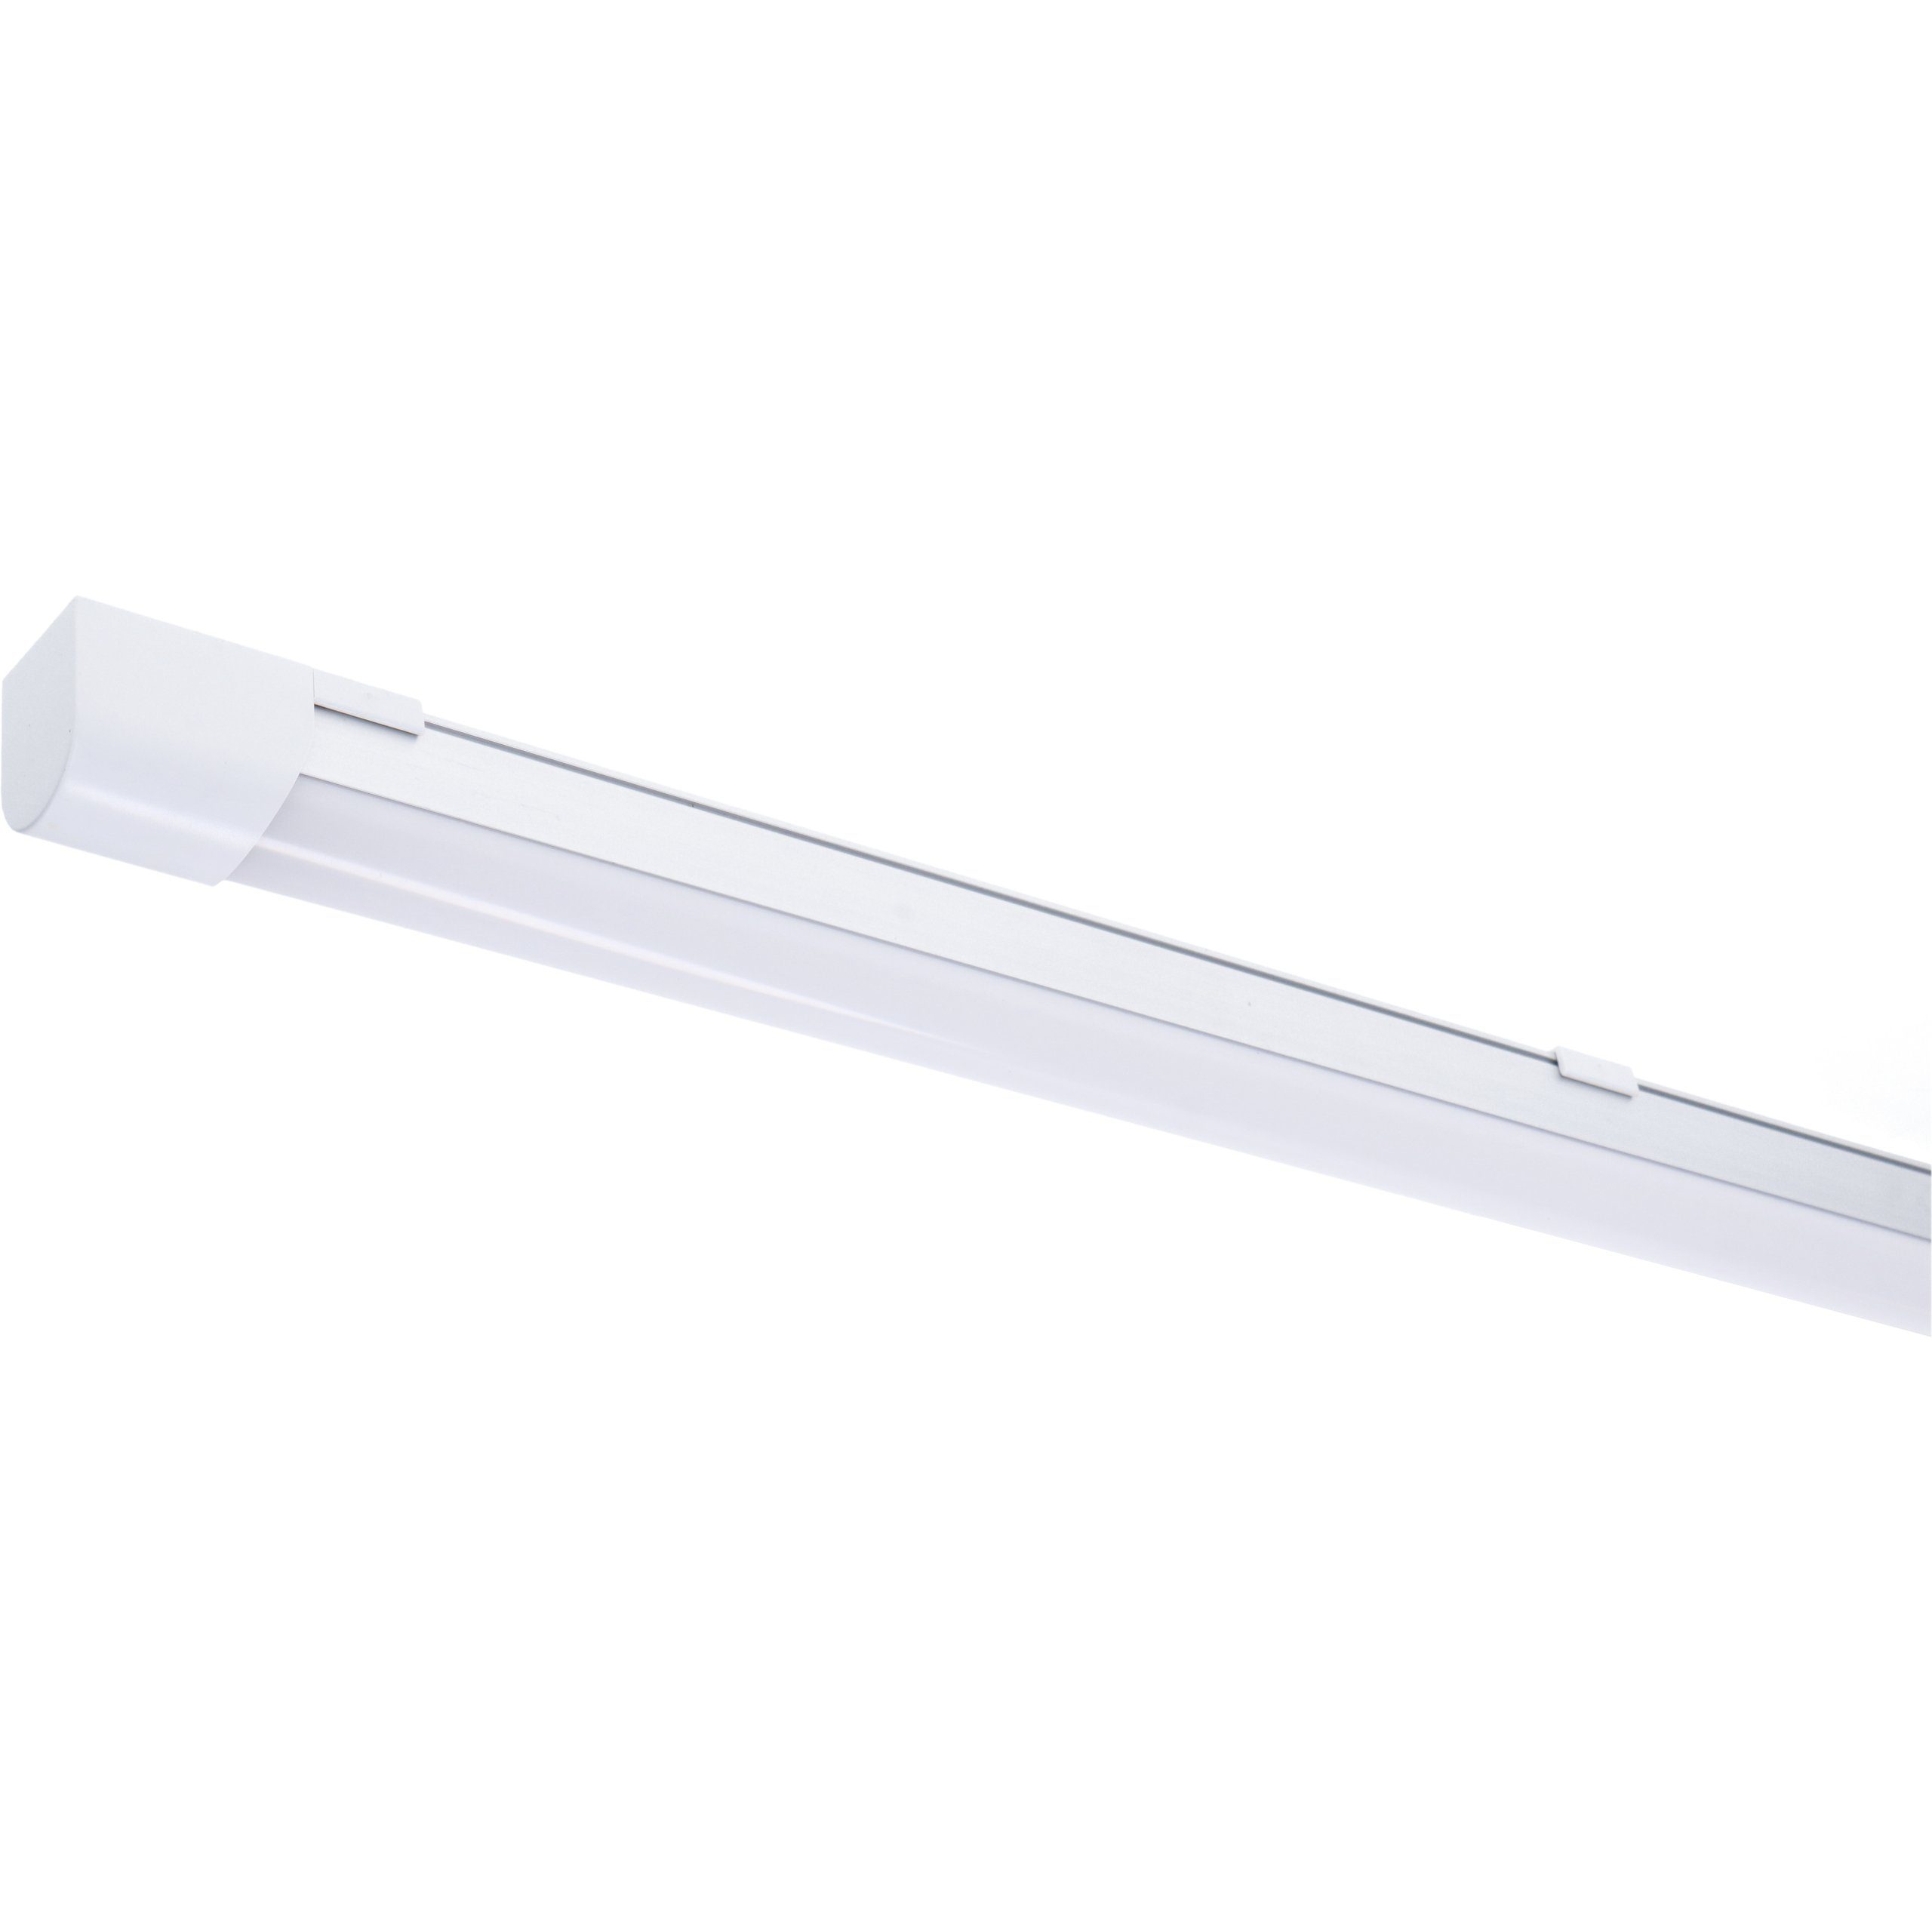 LED's light LED Unterbauleuchte 2410209 LED-Unterbauleuchte mit 120 cm LED-Röhre, LED, 18 Watt neutralweiß G13